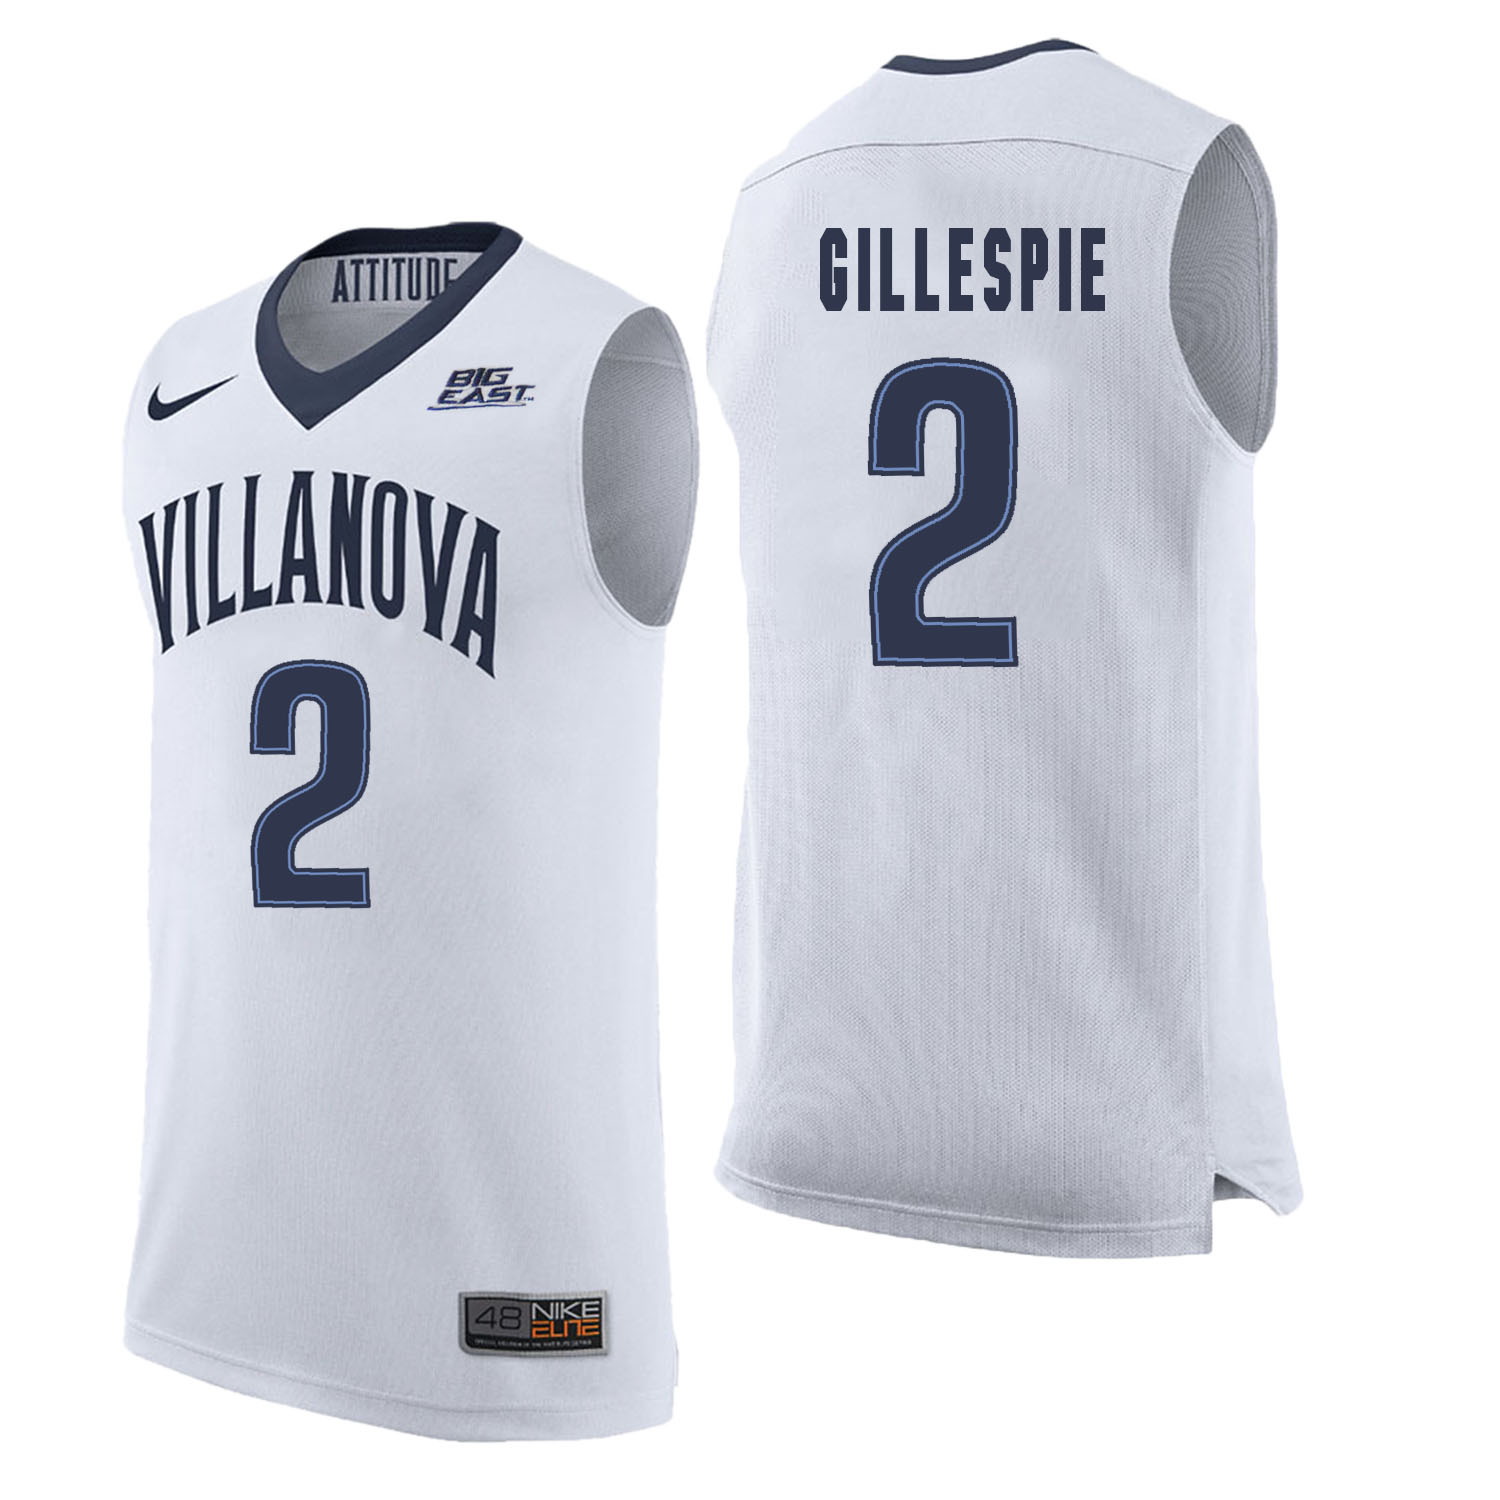 Villanova Wildcats 2 Collin Gillespie White College Basketball Elite Jersey